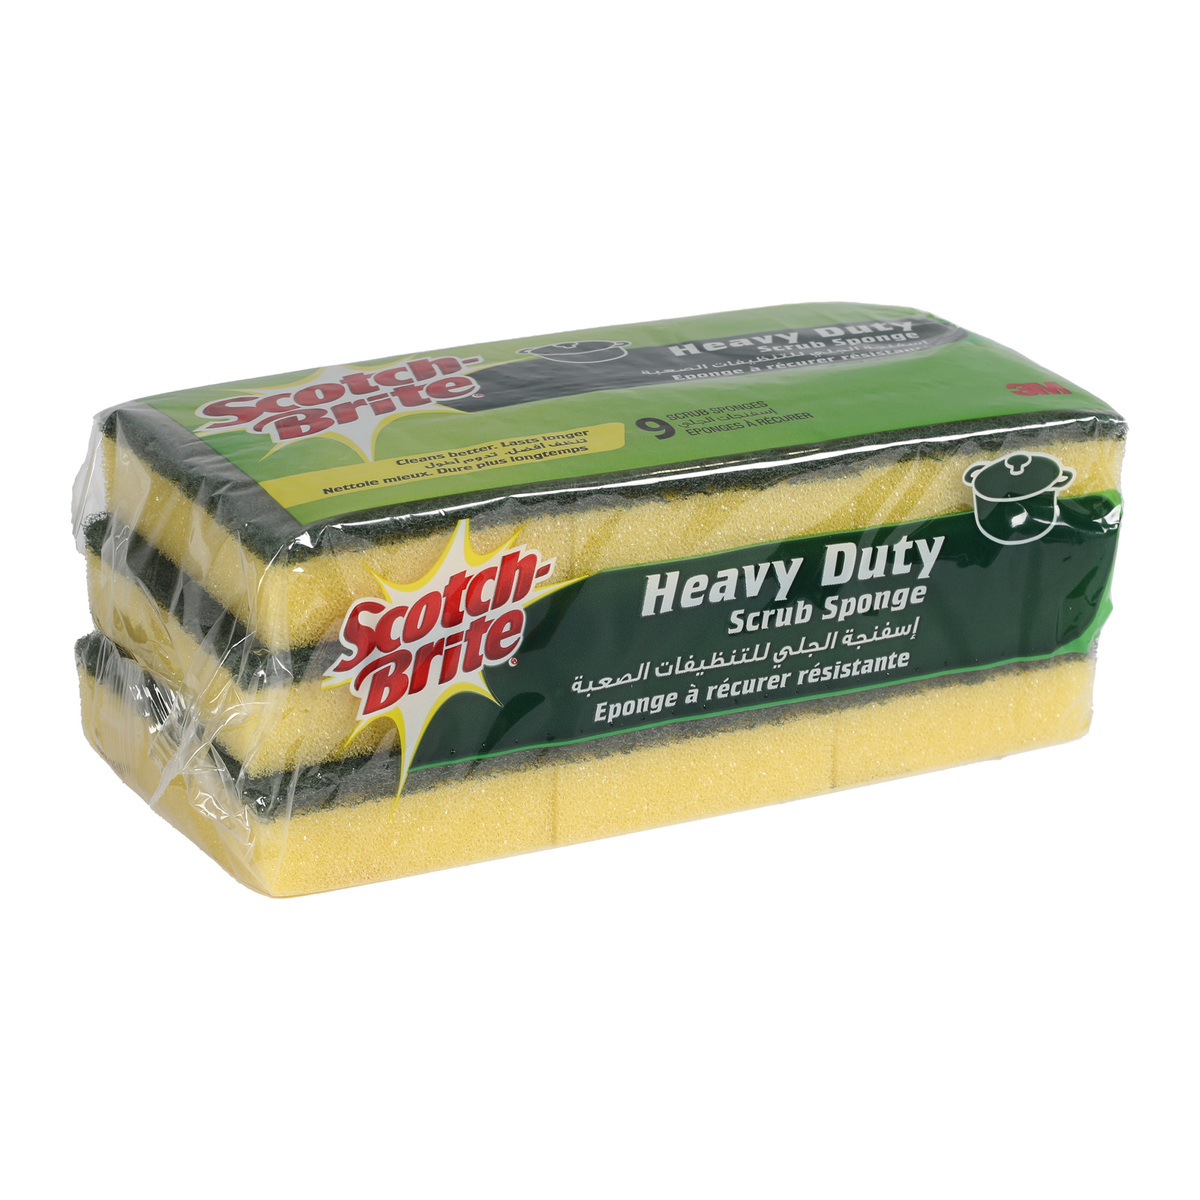 Scotch Brite Heavy Duty Scrub Sponge 9 pcs